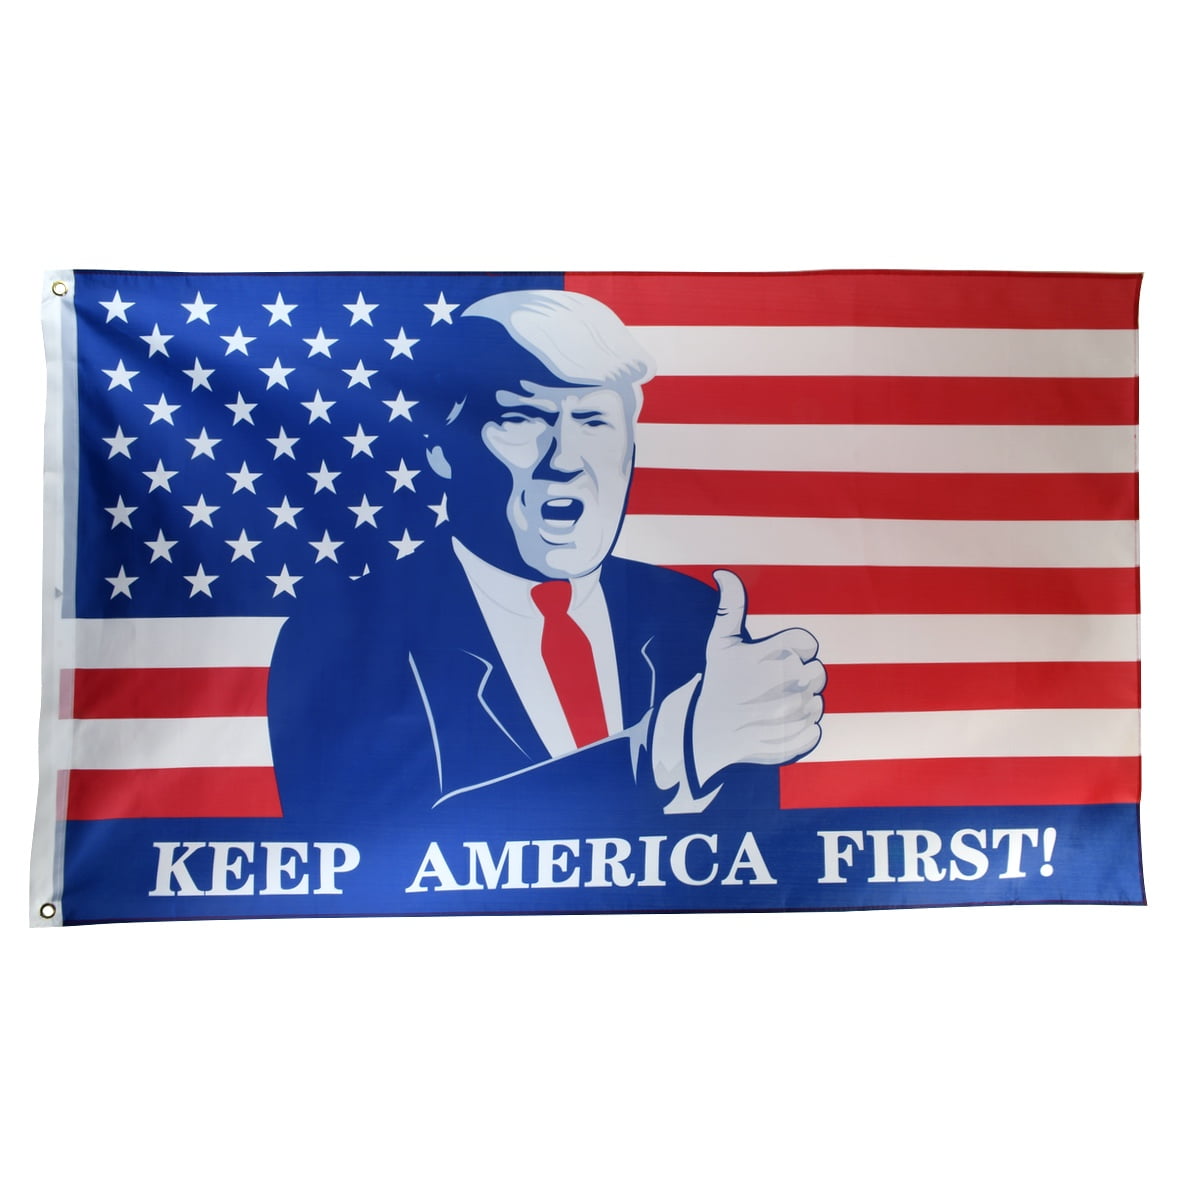 Make America Great Again 2020 2016 Donald Trump Flag FREE SHIPPING Tank 3x5 foot 